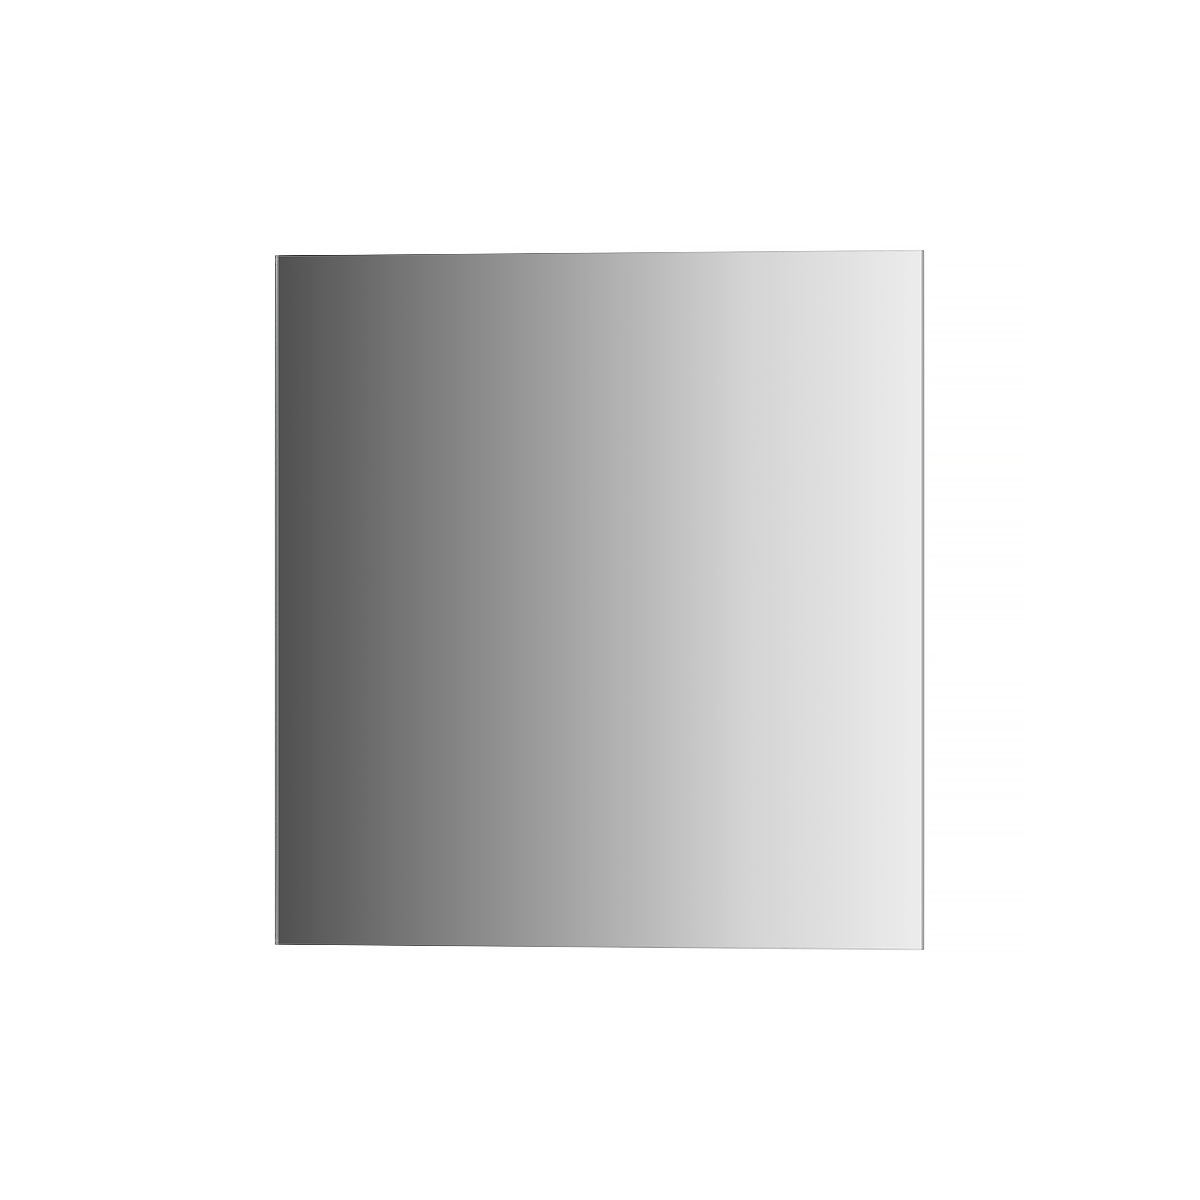 Зеркальная плитка со шлифованной кромкой  Evoform BY 1407 25x25см зеркальная плитка mirox 3g sensea nnlm19 квадратная 10x10 см глянцевая серебро 16 шт